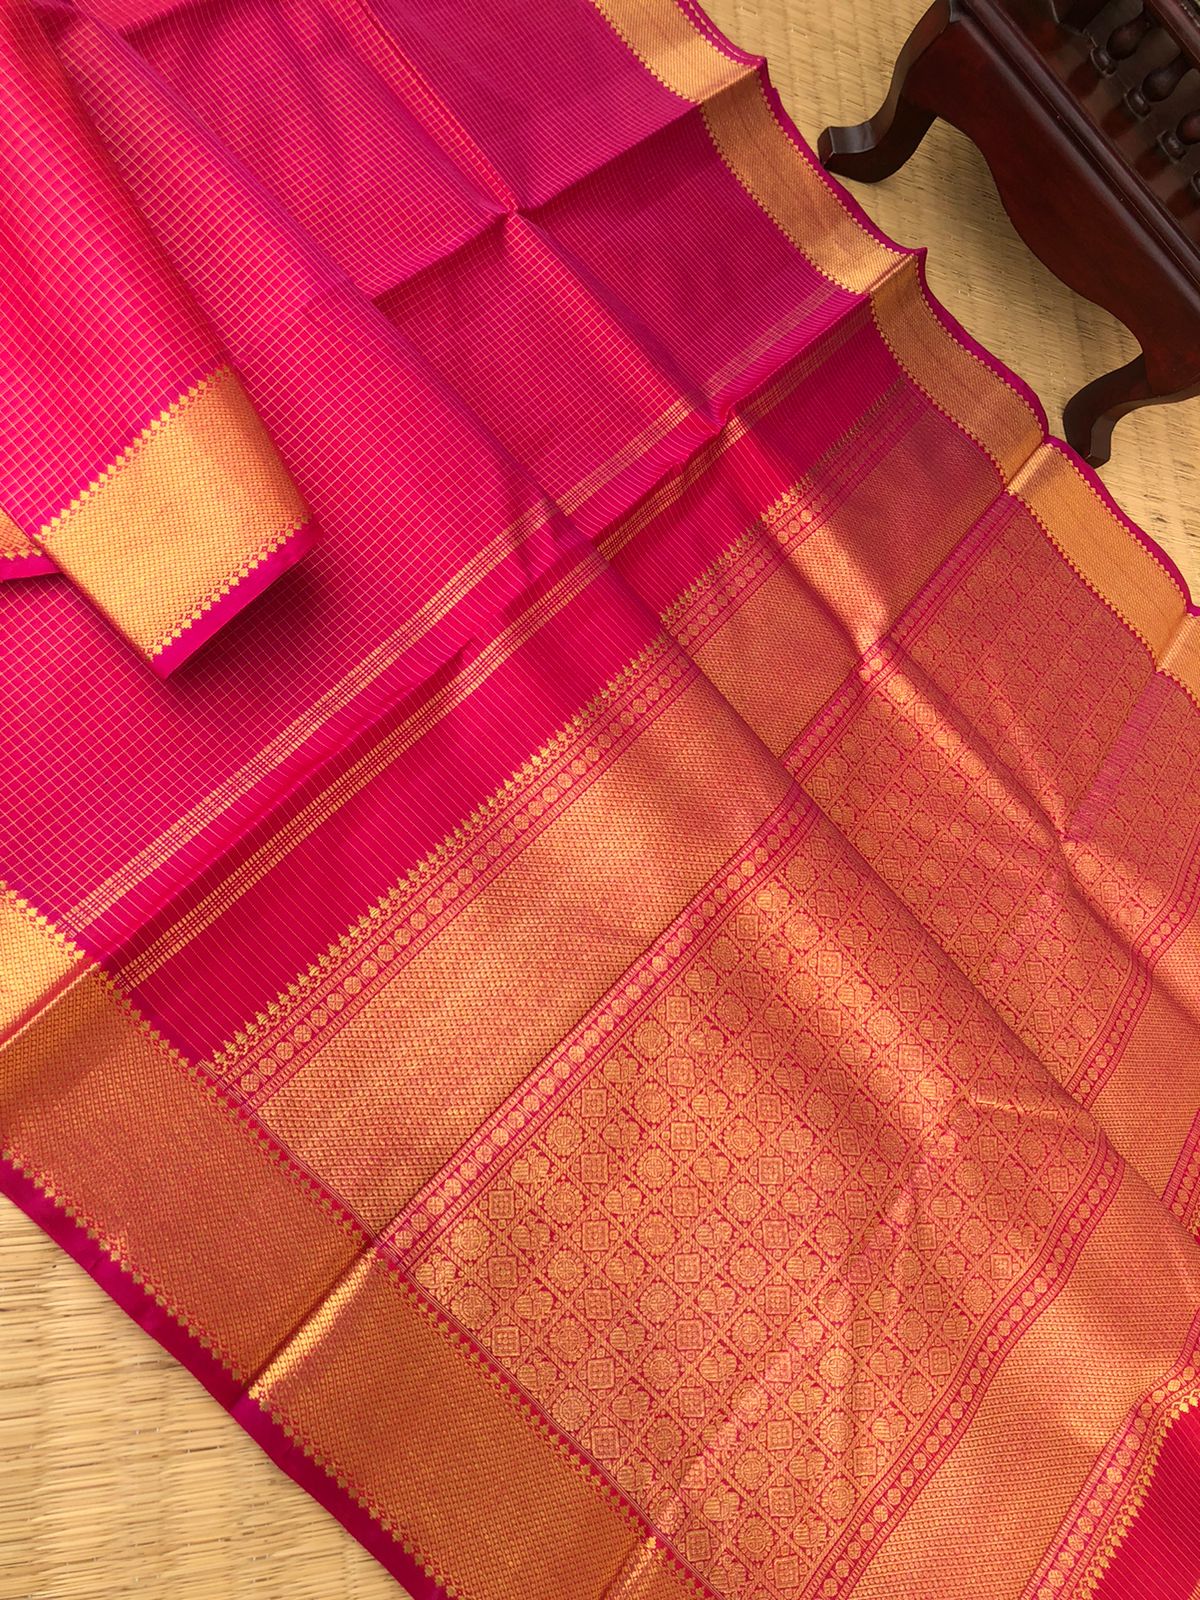 Oosi kattams on Kanchivaram - Wedding vibes on majenta pink and deep Indian pink oosi Kattam